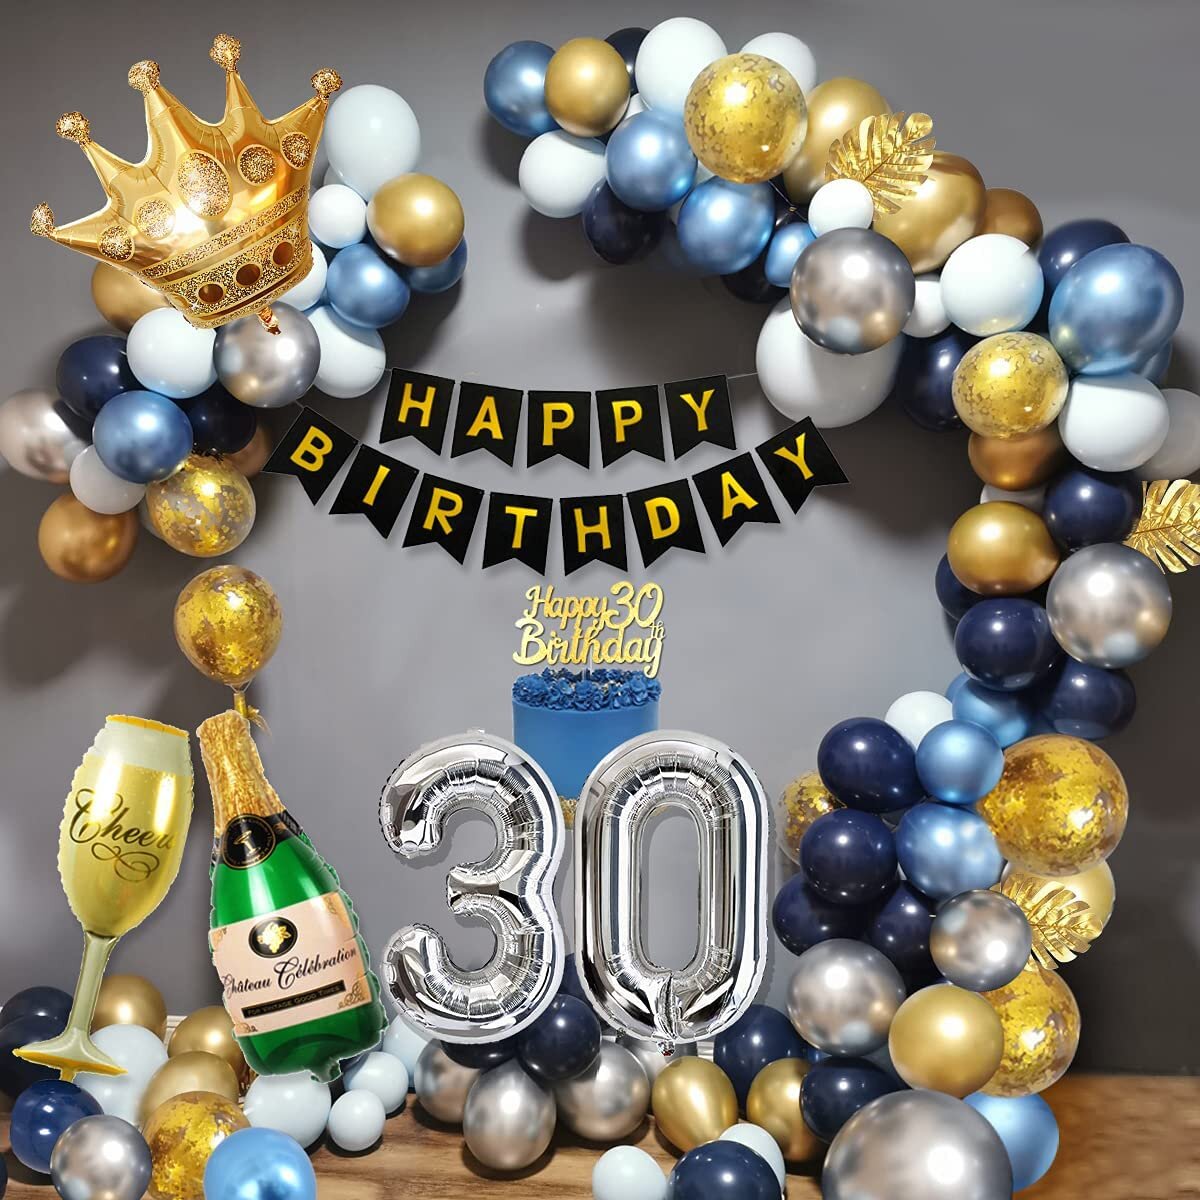 Black & Gold Celebration 50th Birthday Balloon Birthday Party Decorations